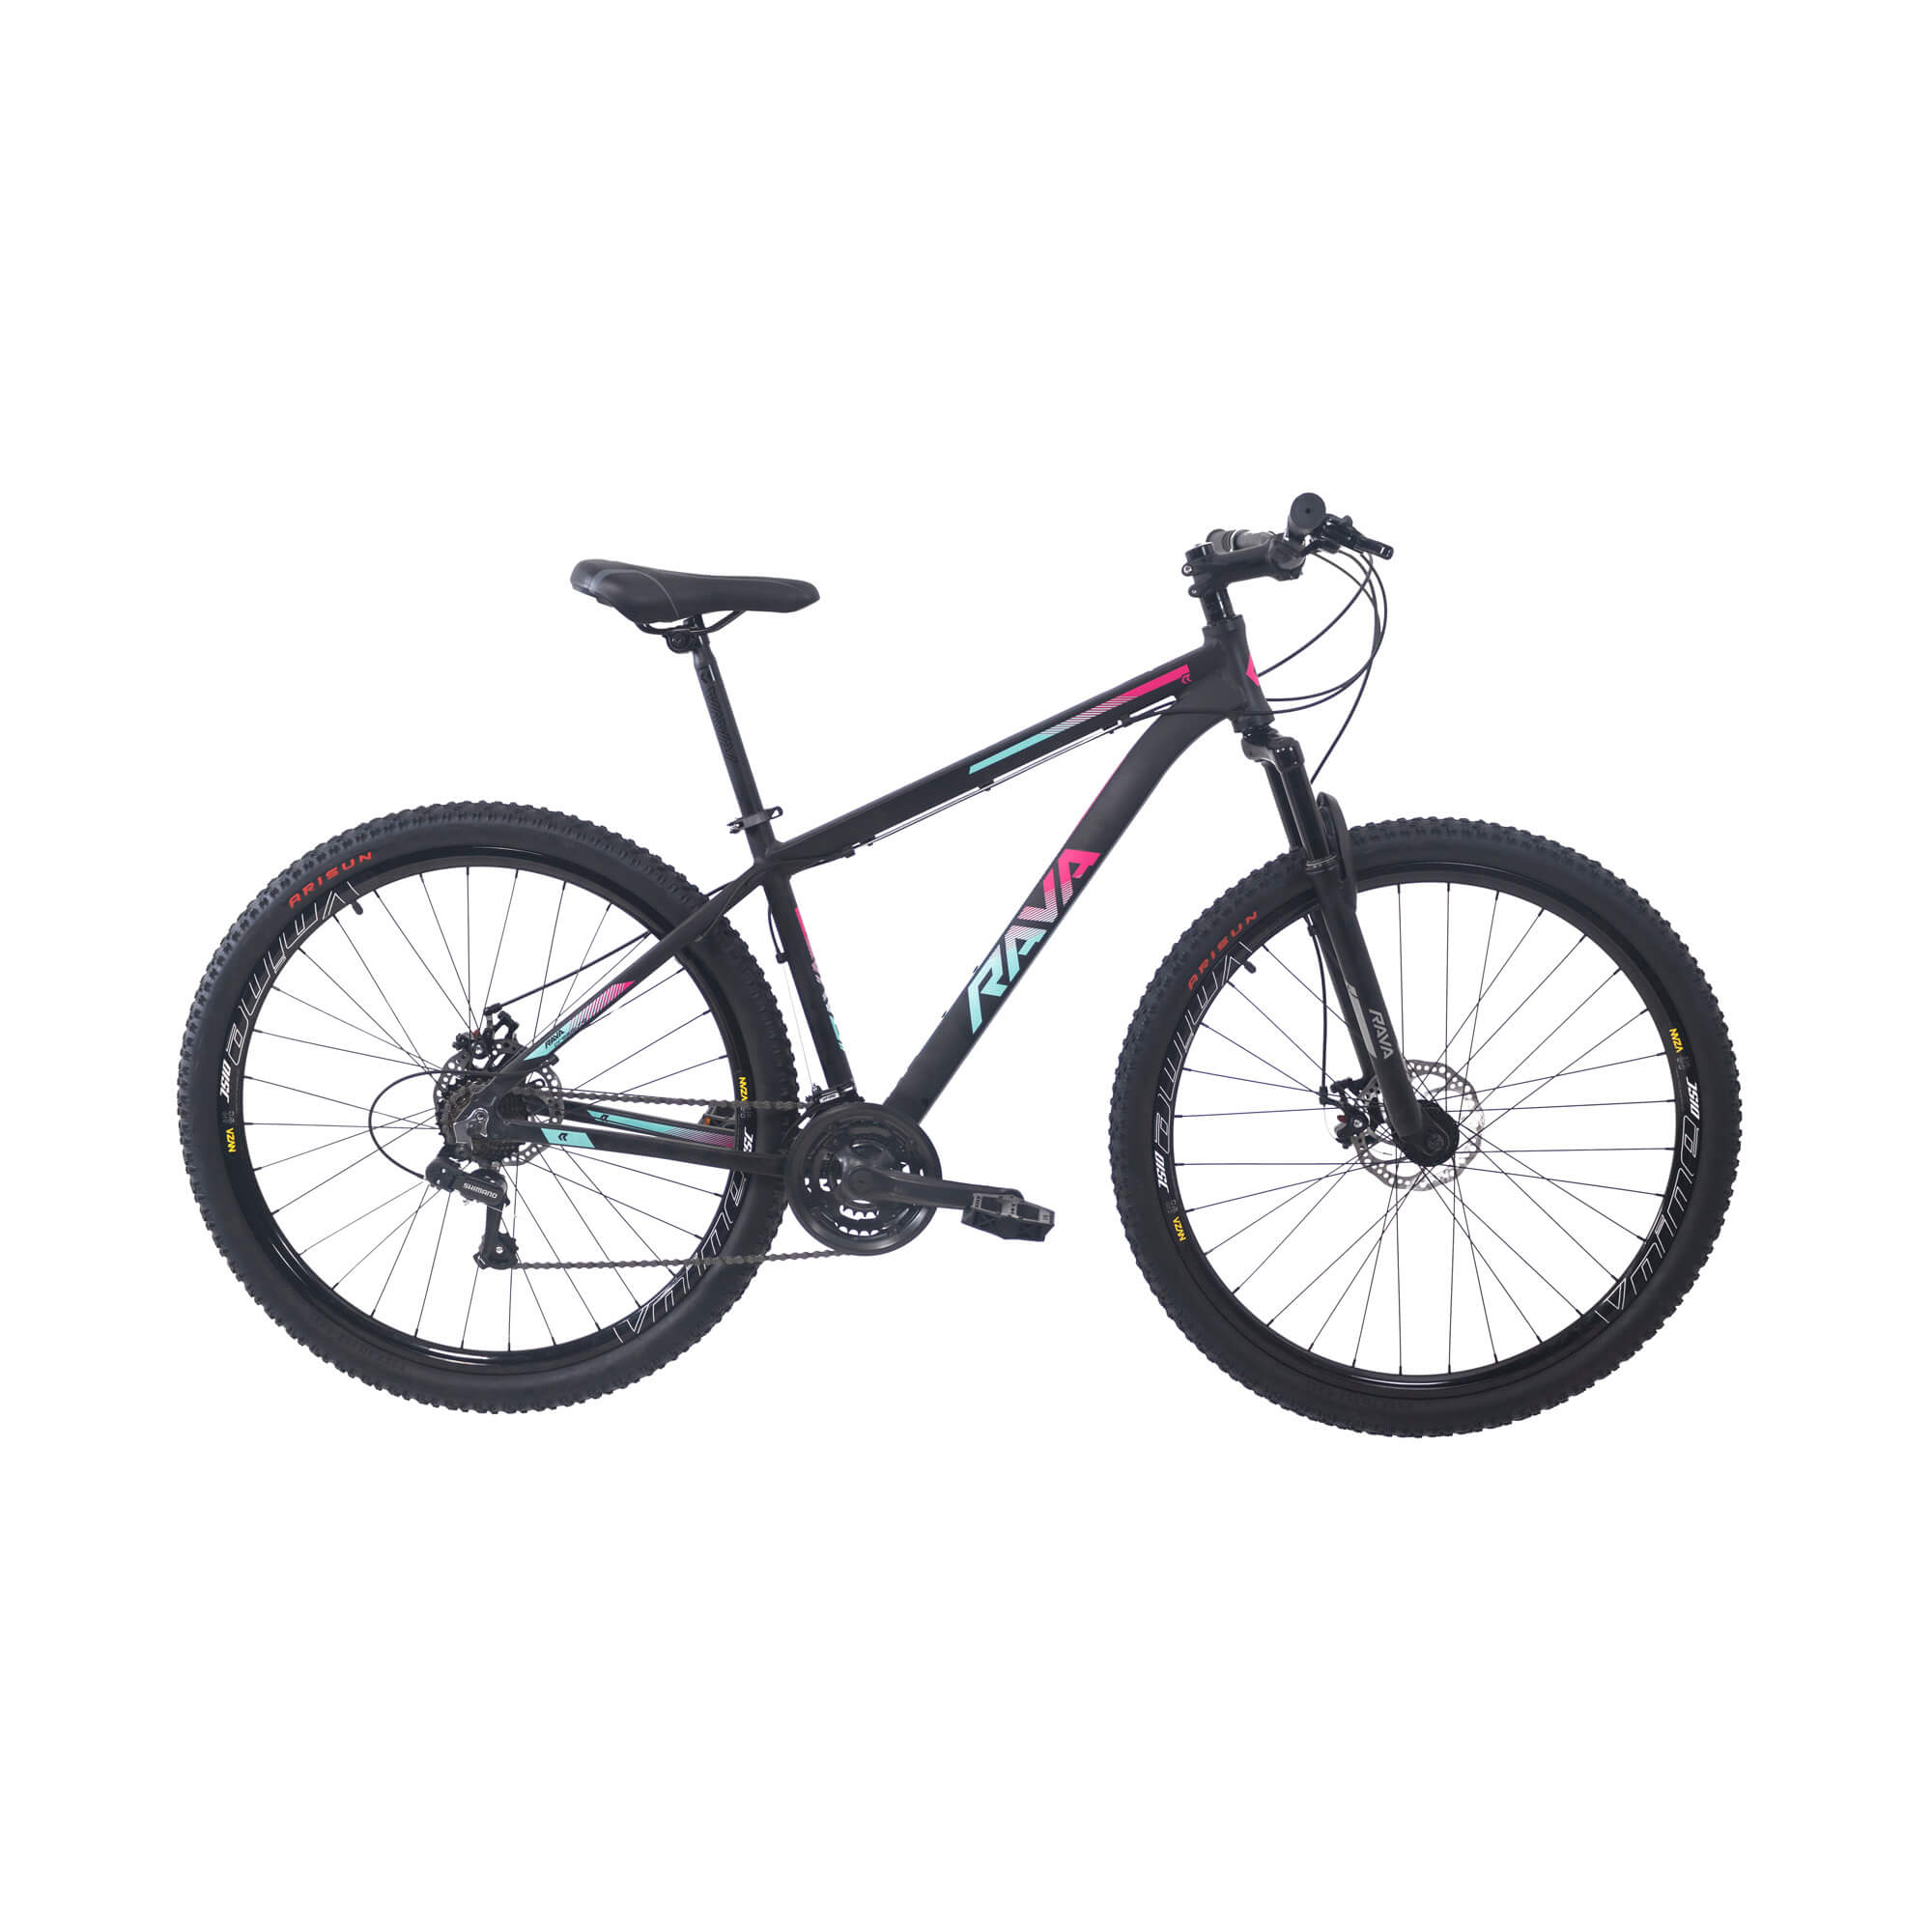 Bicicleta Rava Pressure 2019/2020 | 21 v. - Preto/Pink/Azul, 17"